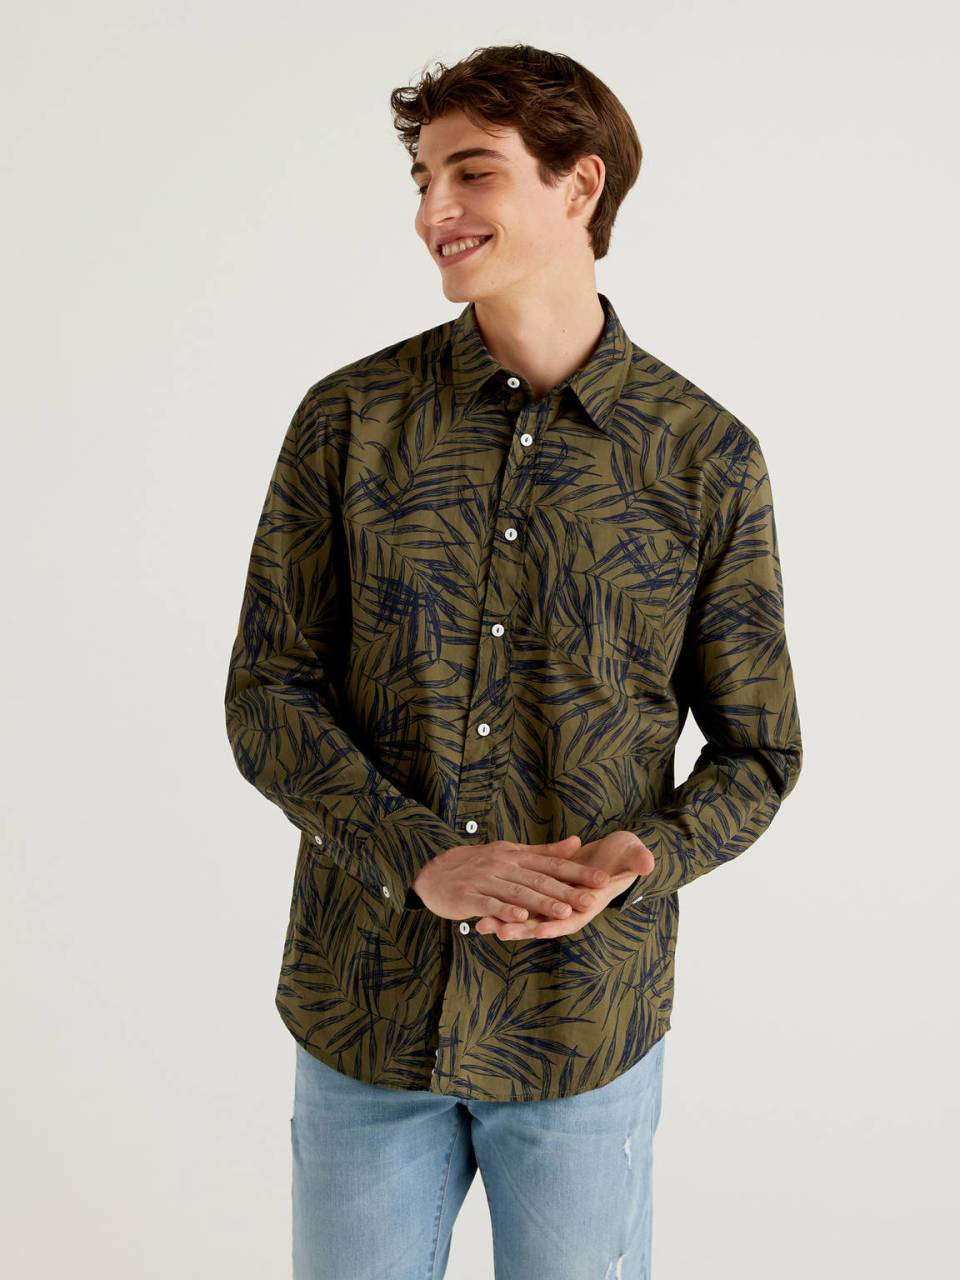 Benetton 100% cotton shirt with botanical print. 1